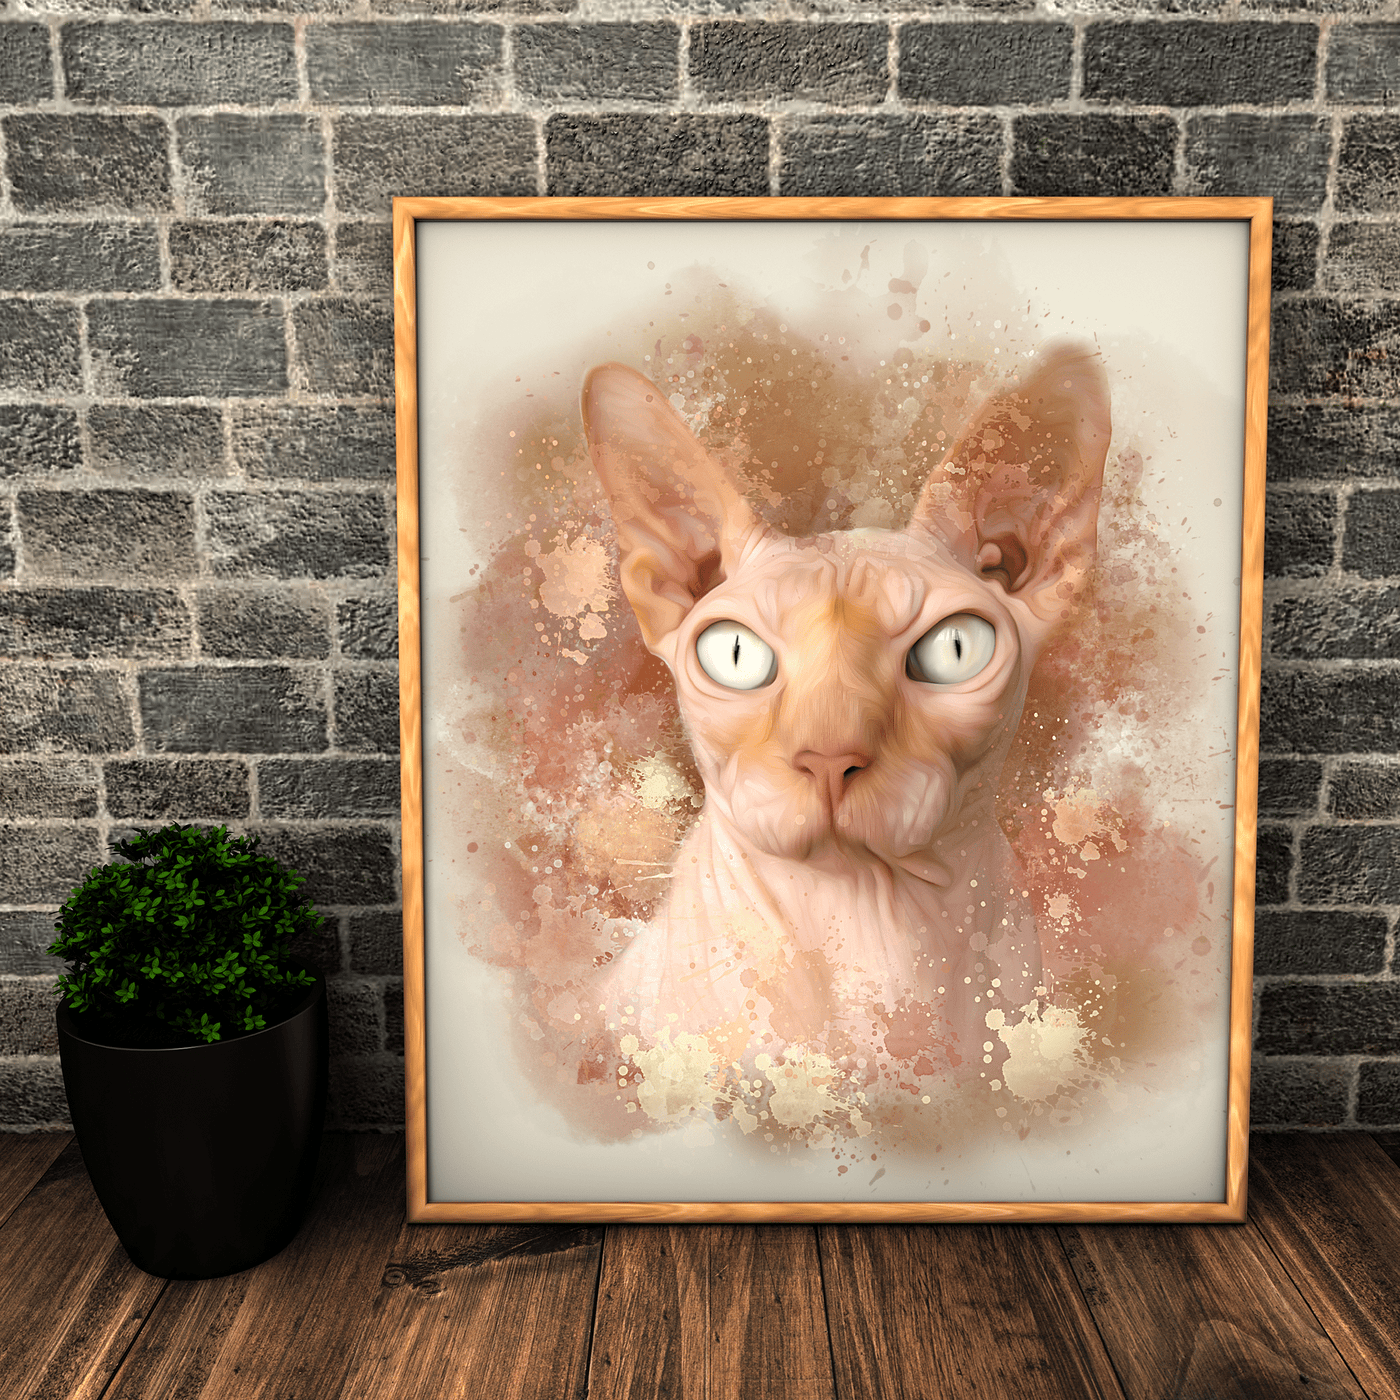 Custom Cat Canvas Painting